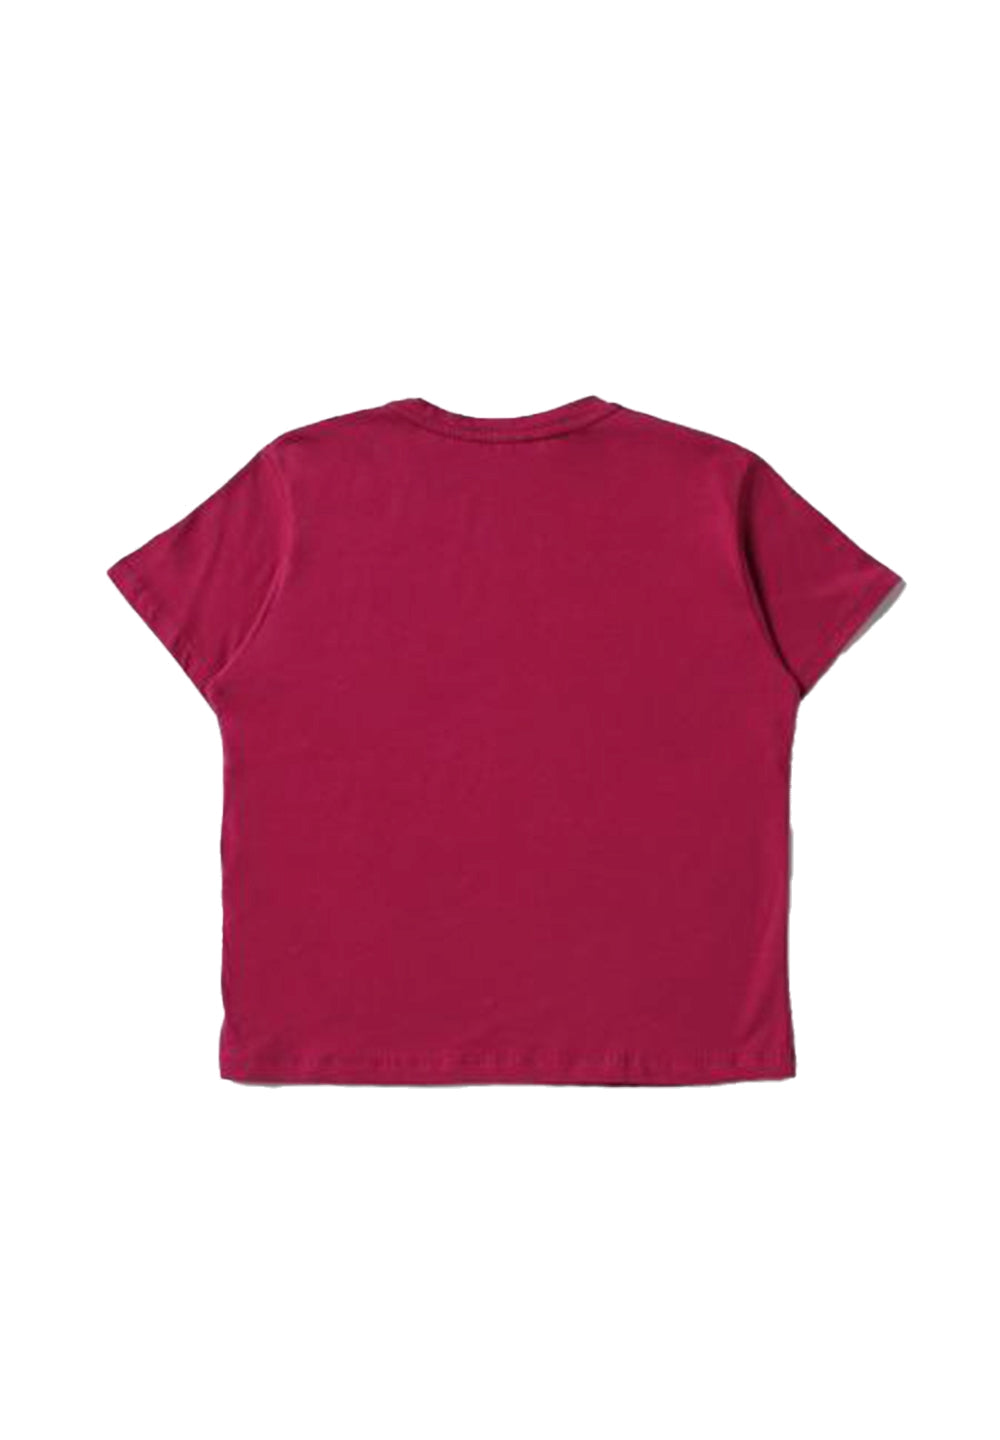 T-shirt fuxia per bambina - Primamoda kids